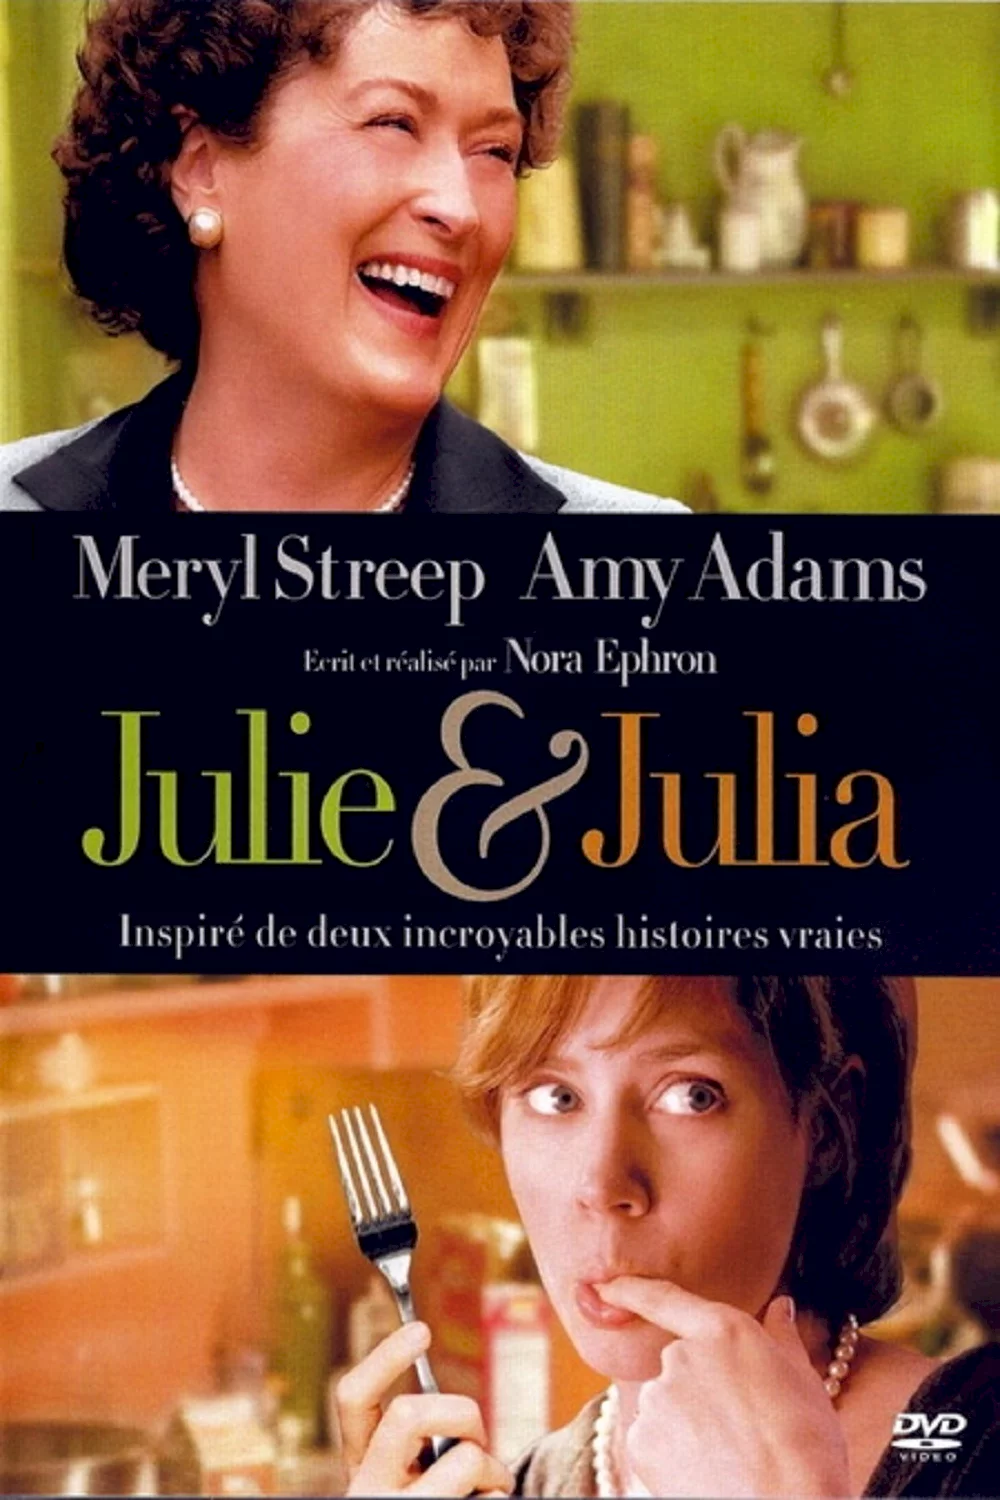 Photo 1 du film : Julia et julia